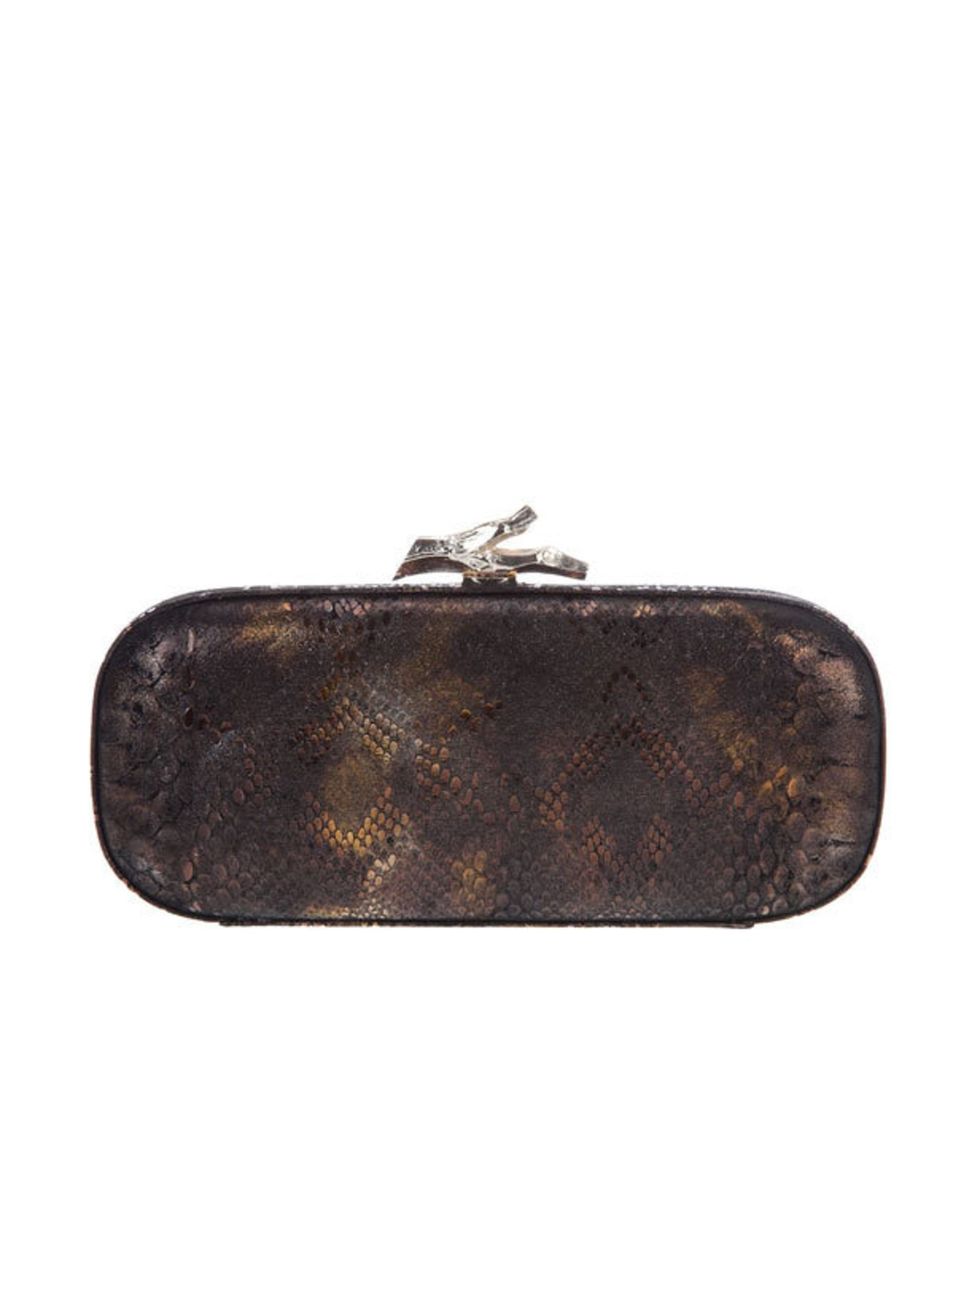 <p>Diane von Furstenburg snake embossed clutch, £230, at <a href="http://www.farfetch.com/shopping/women/diane-von-furstenberg/bags-purses/item10075961.aspx">farfetch.com</a></p>